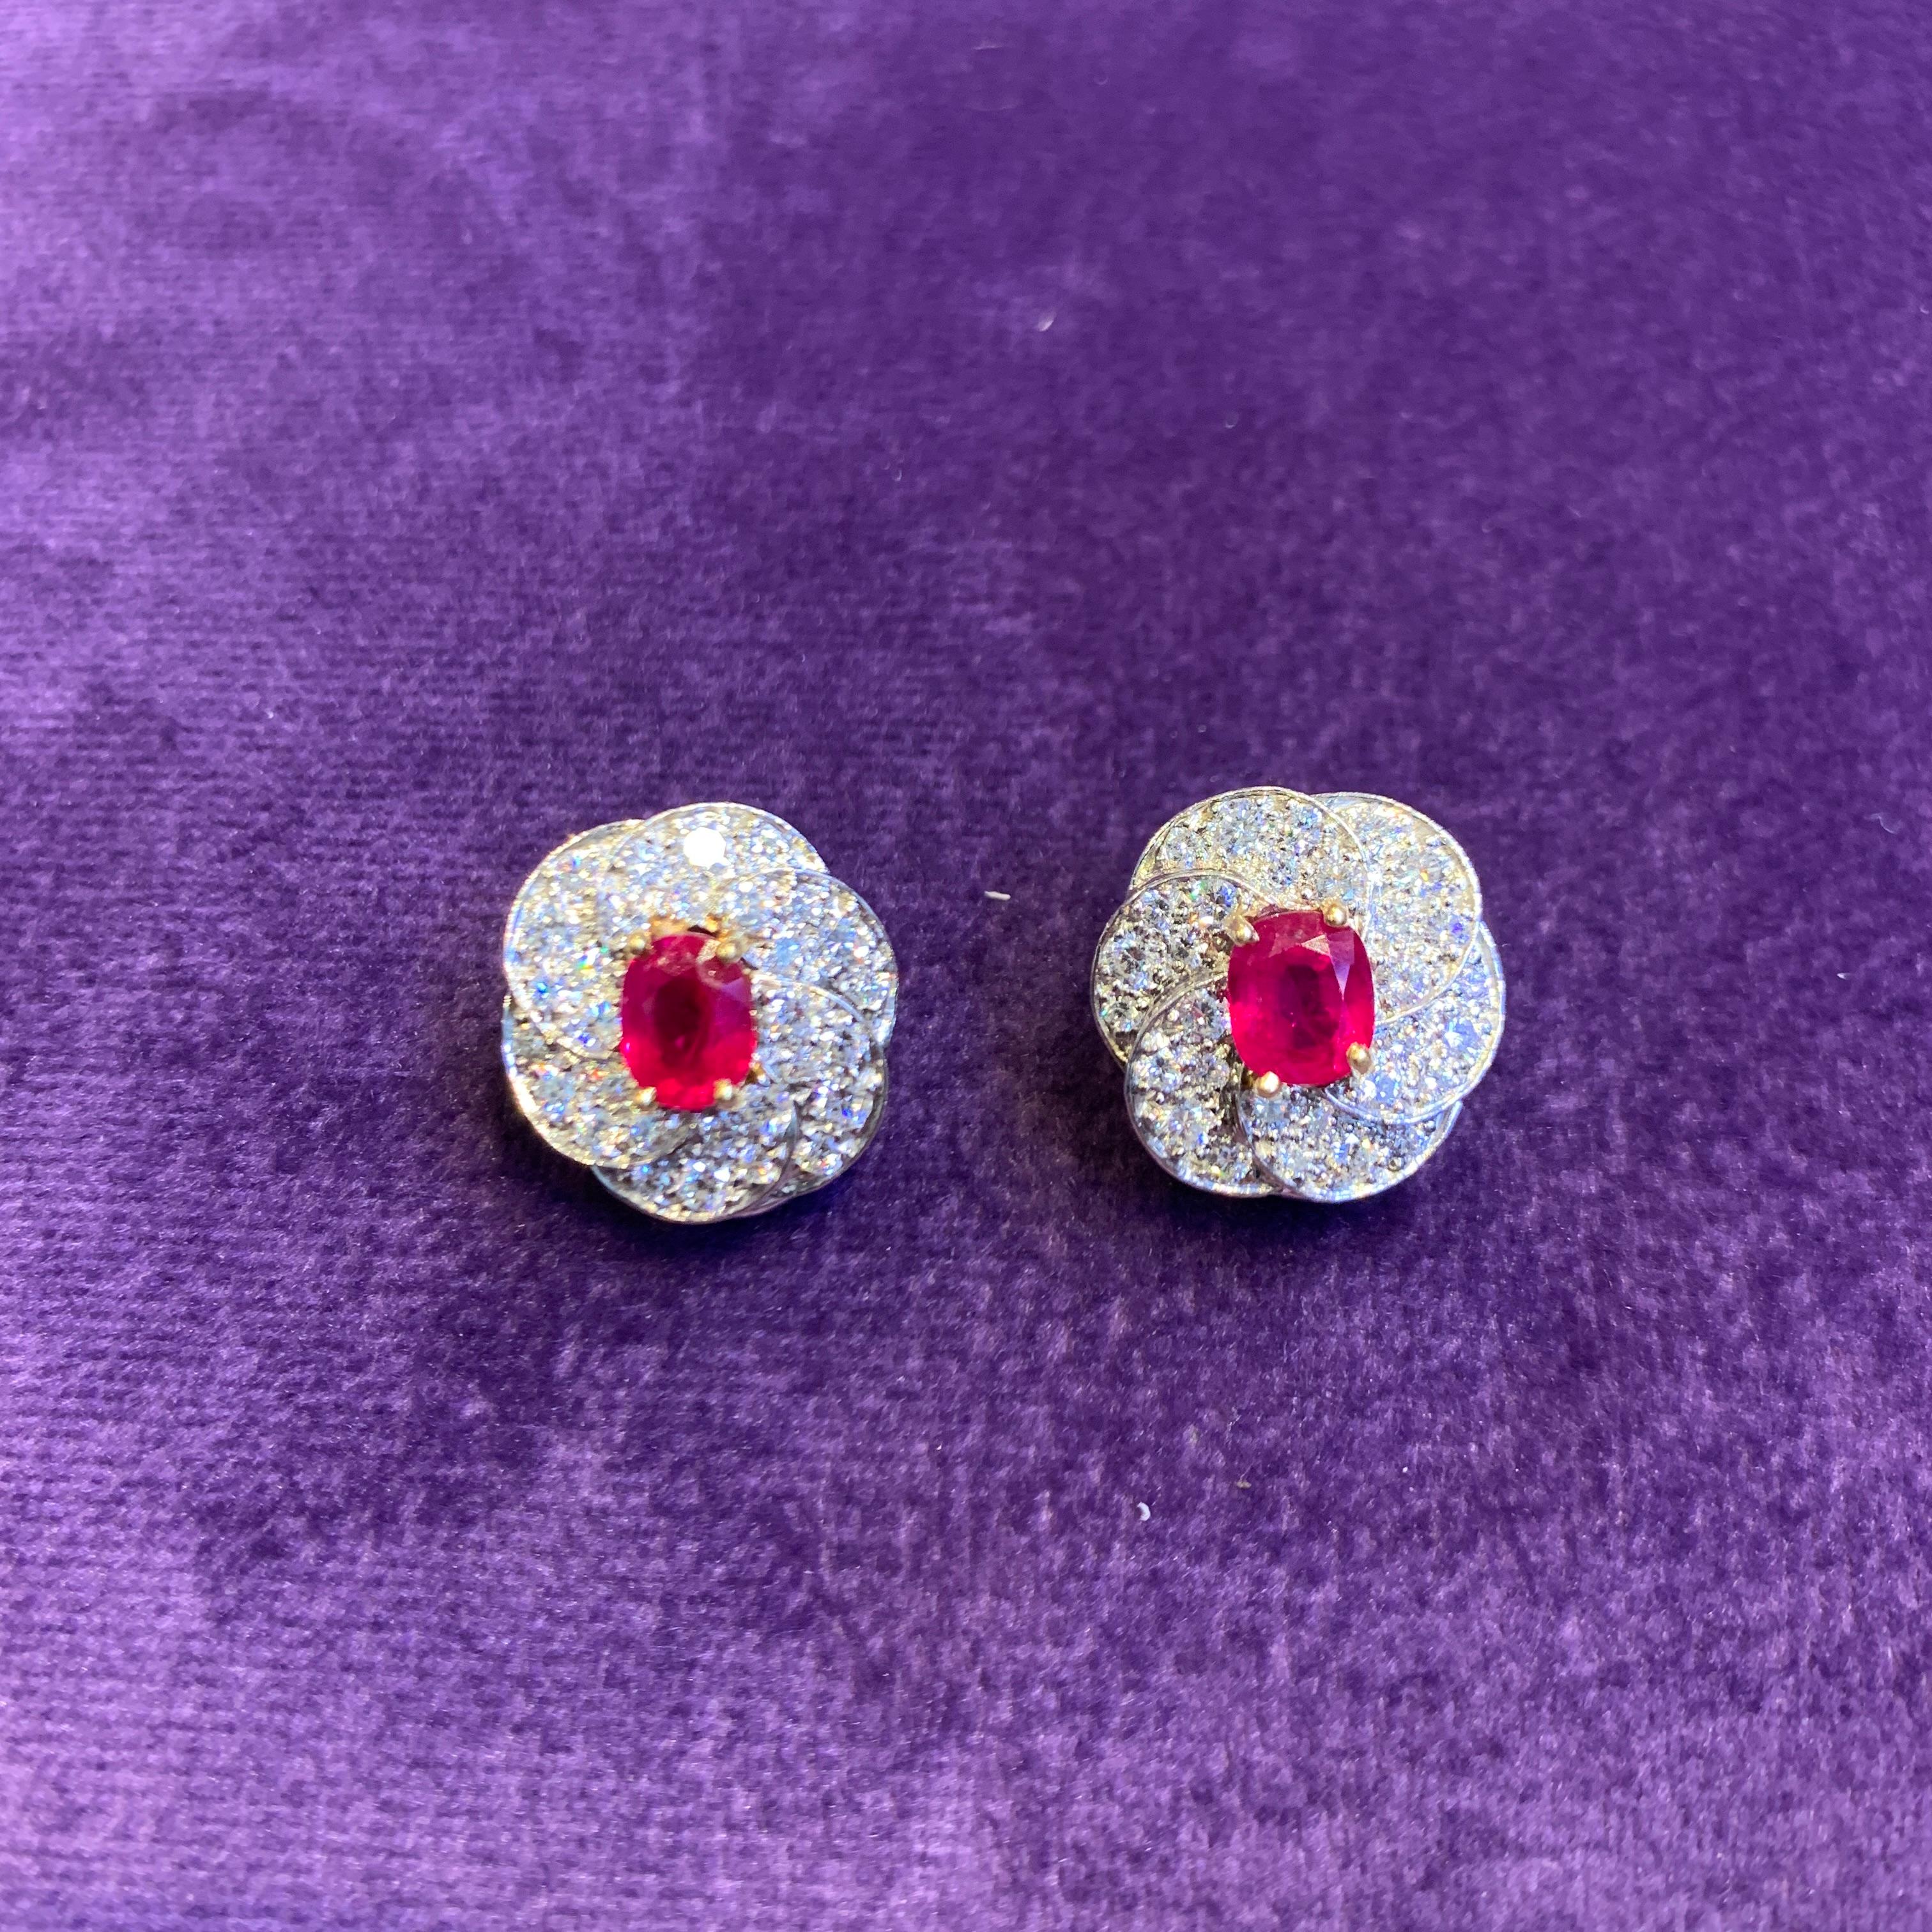 Oscar Heyman Brothers Certified Burmese Ruby & Diamond Earrings For Sale 1